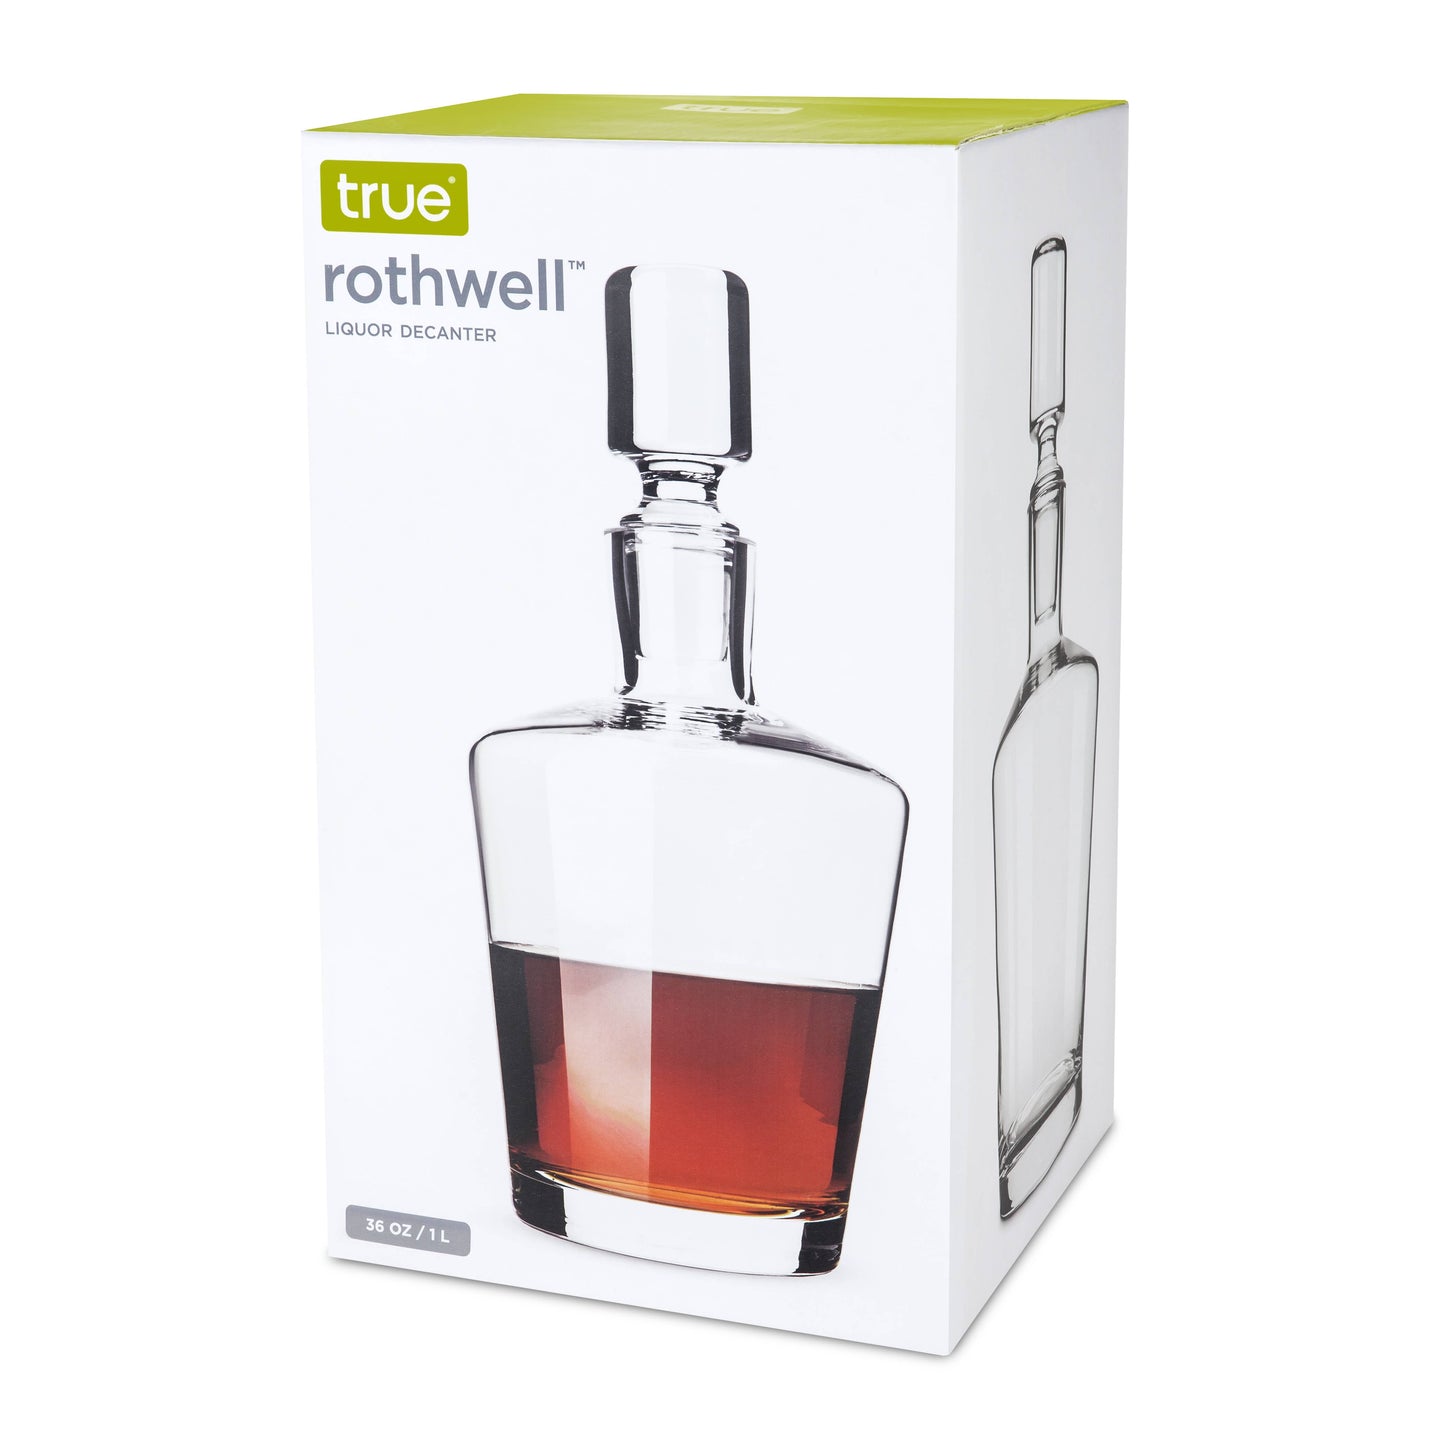 Rothwell Liquor Decanter by True